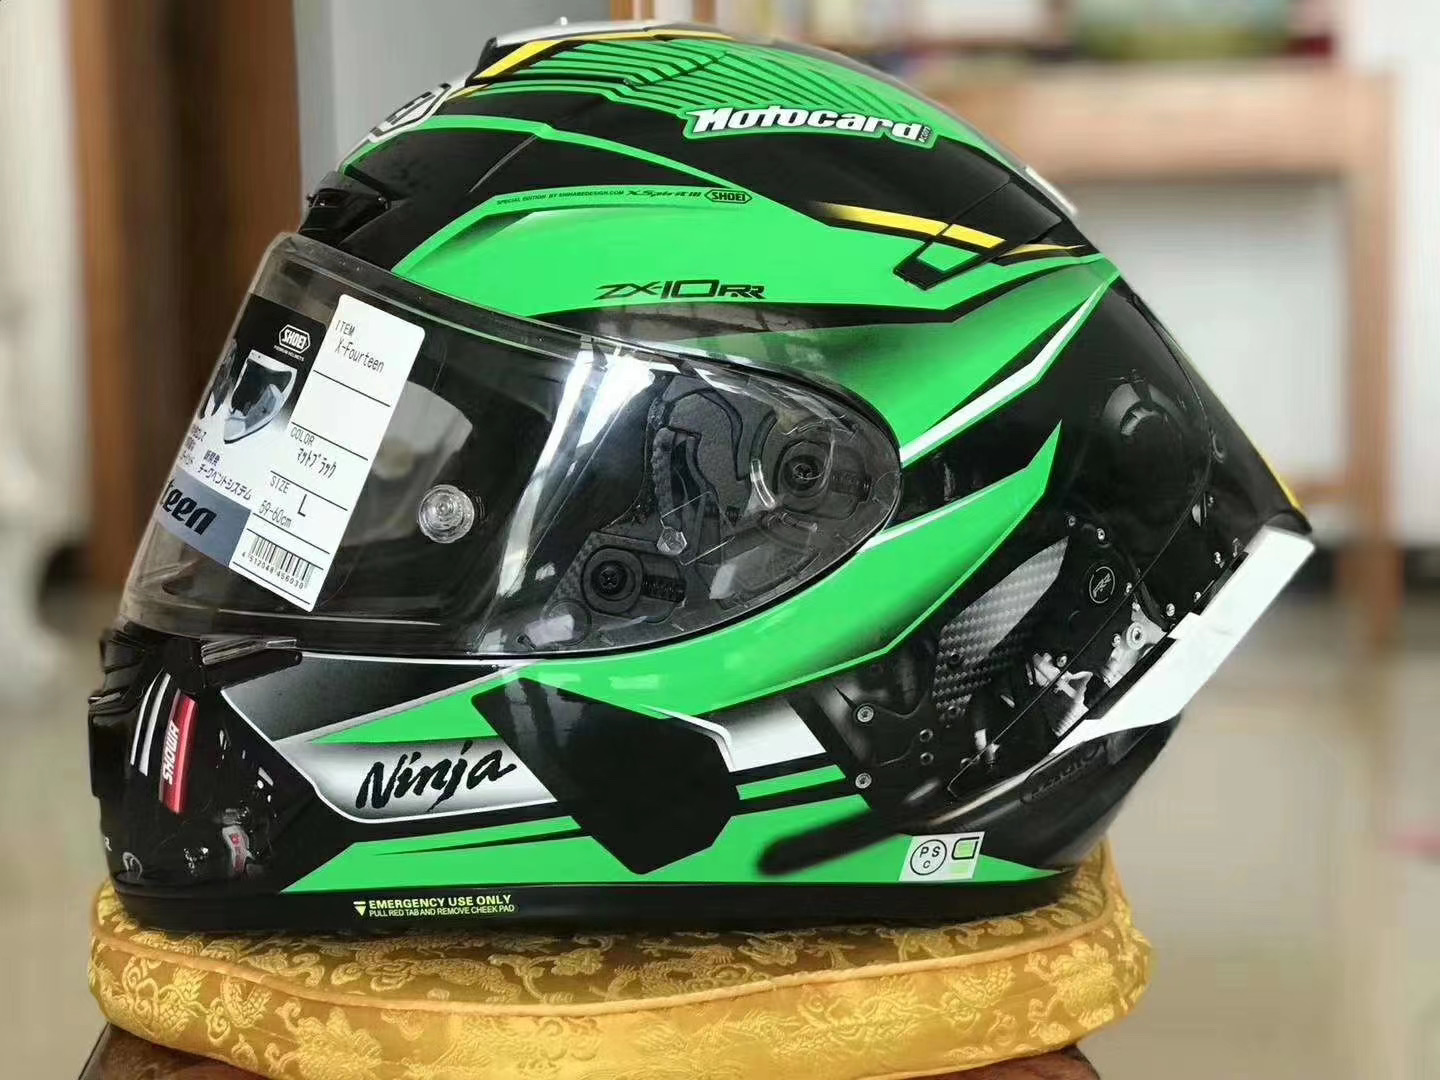 

Full Face shoei X14 kawasa kki green Motorcycle Helmet anti-fog visor Man Riding Car motocross racing motorbike helmet-NOT-ORIGINAL-helmet M L  XXL, Clear+sliver 2 visors